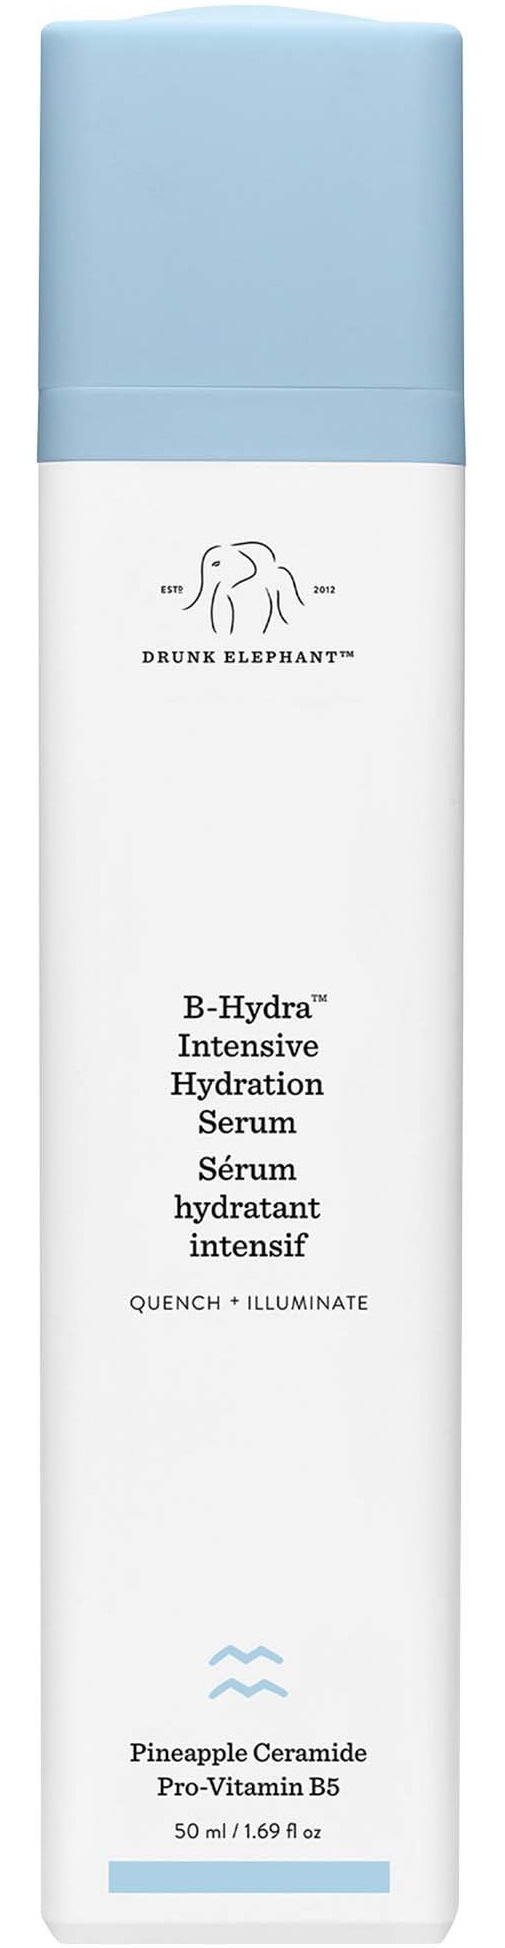 Drunk Elephant B-hydra™ Intensive Hydration Serum